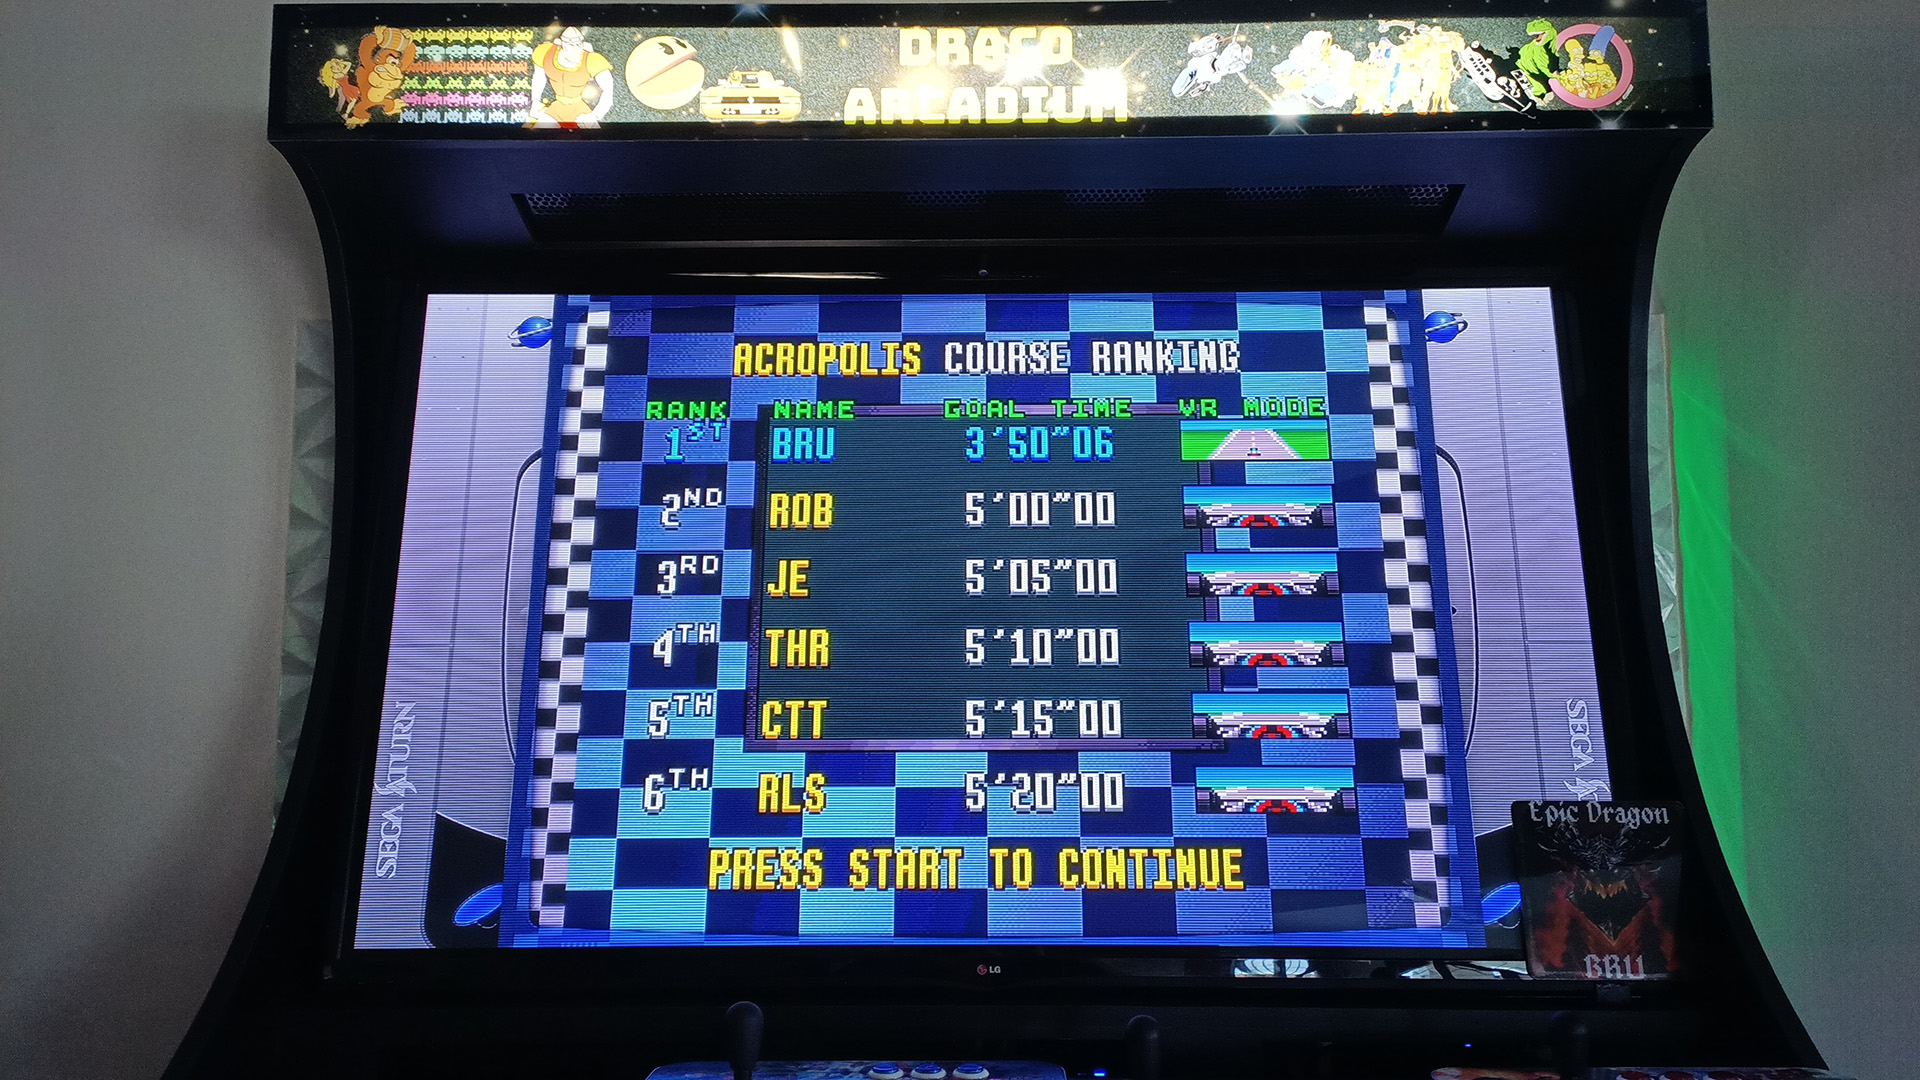 EpicDragon: Virtua Racing [Arcade/Acropolis] (Sega Saturn Emulated) 0:03:50.06 points on 2022-08-24 17:47:59